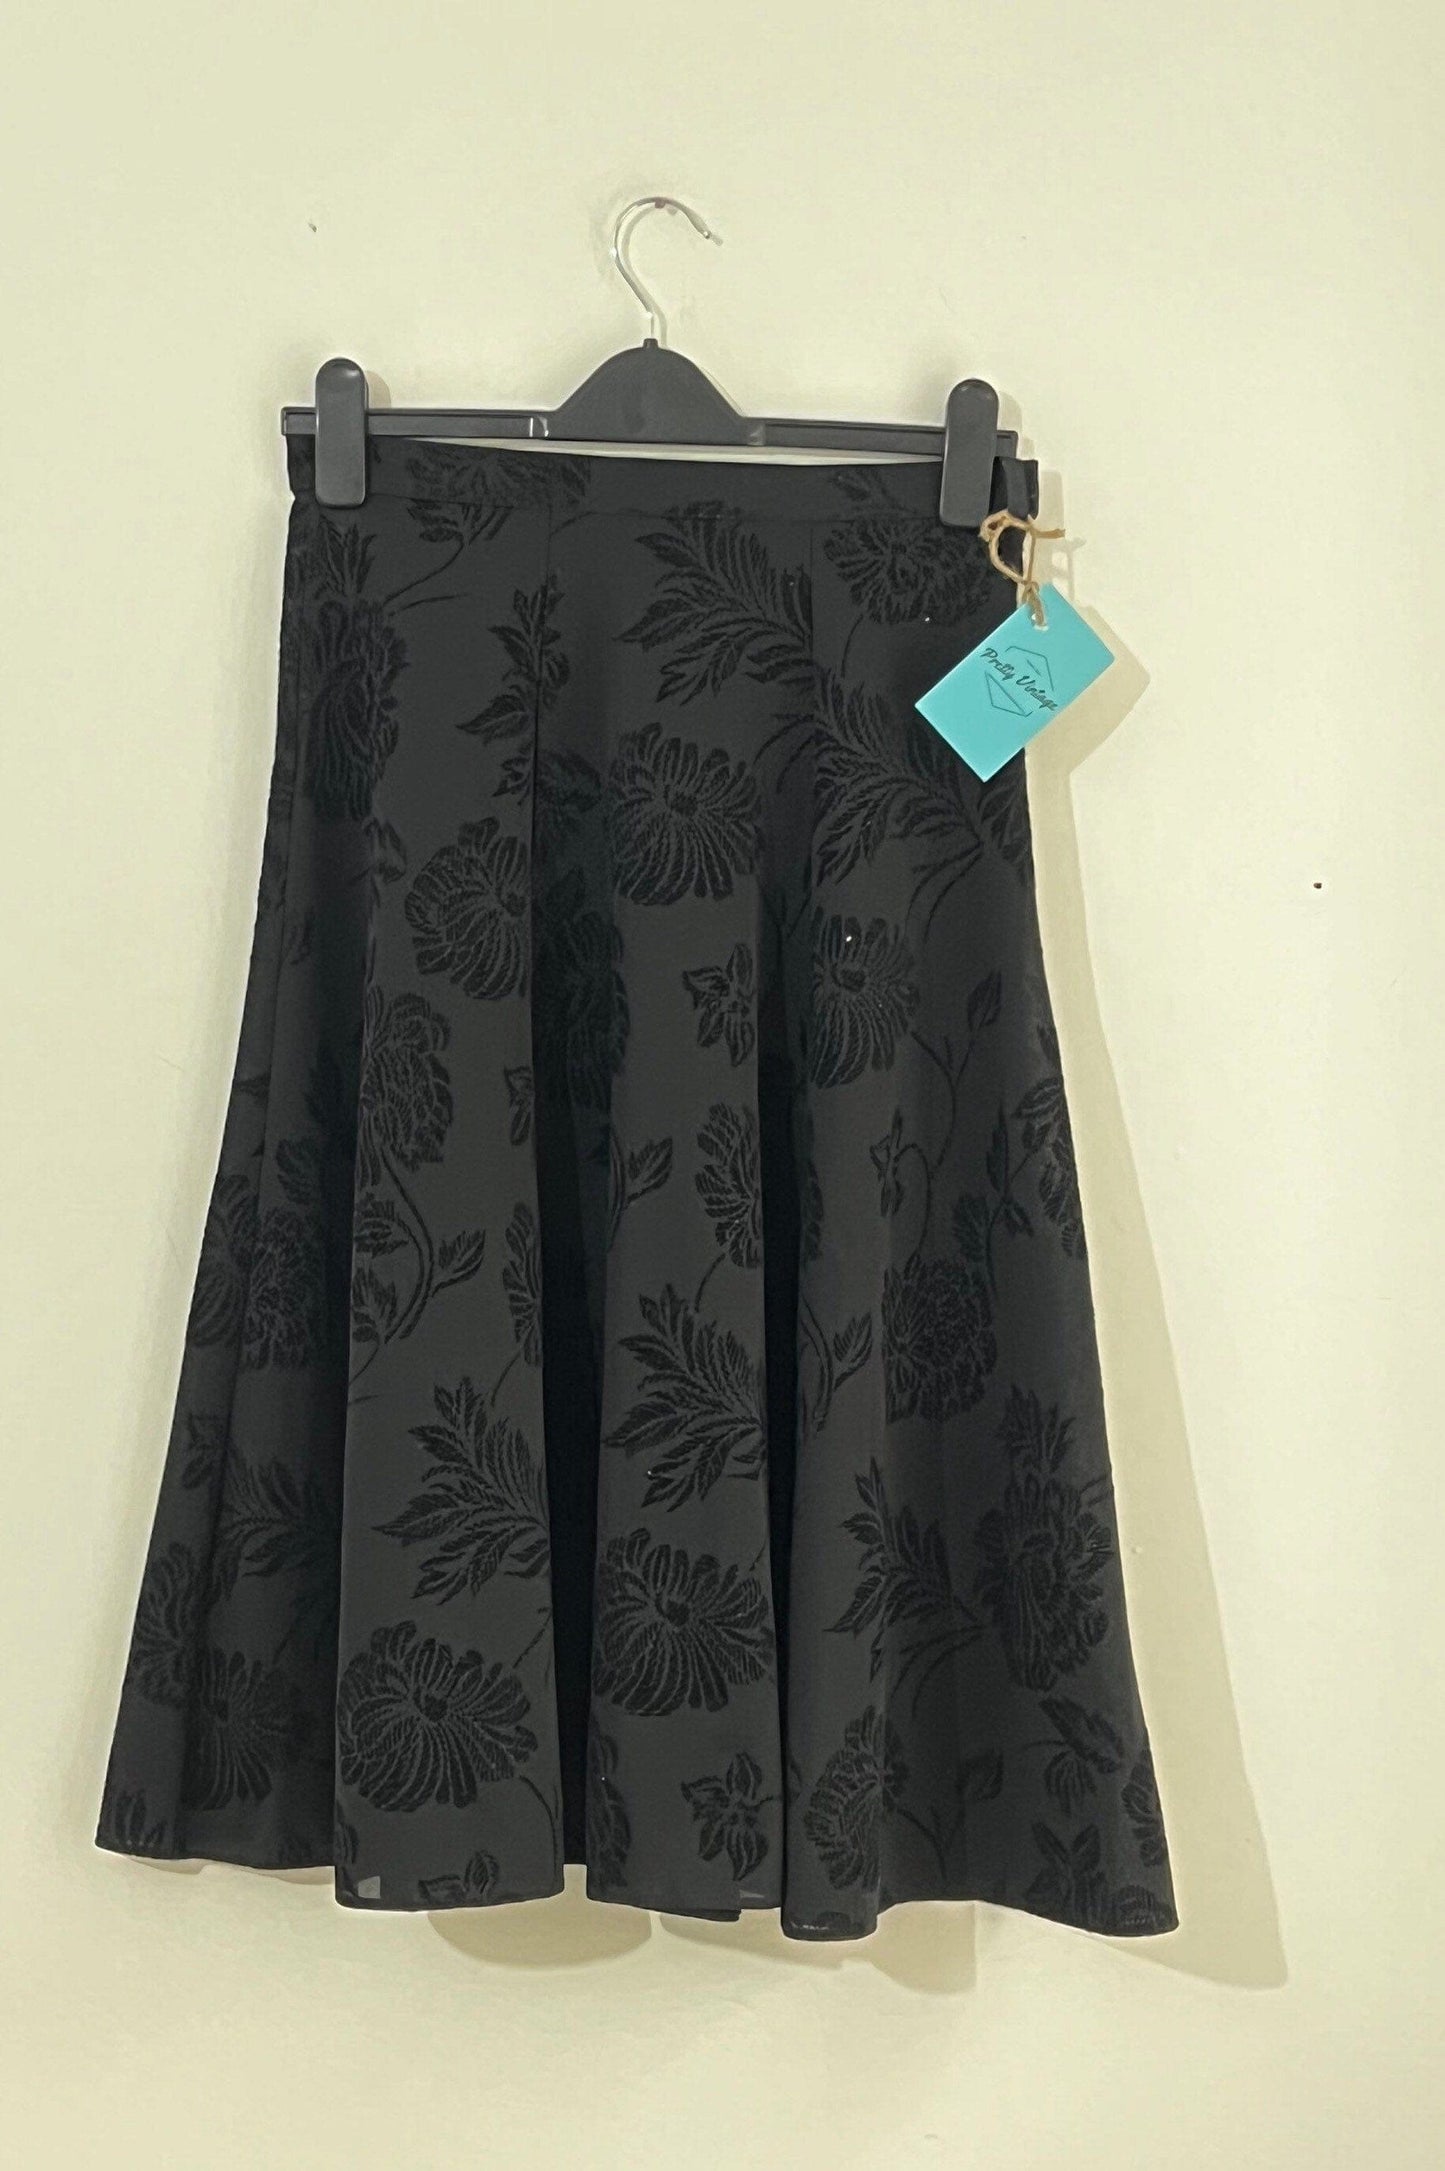 Vintage Swing skirt Midi Length Black floral sparkle pattern skirt UK Size 8